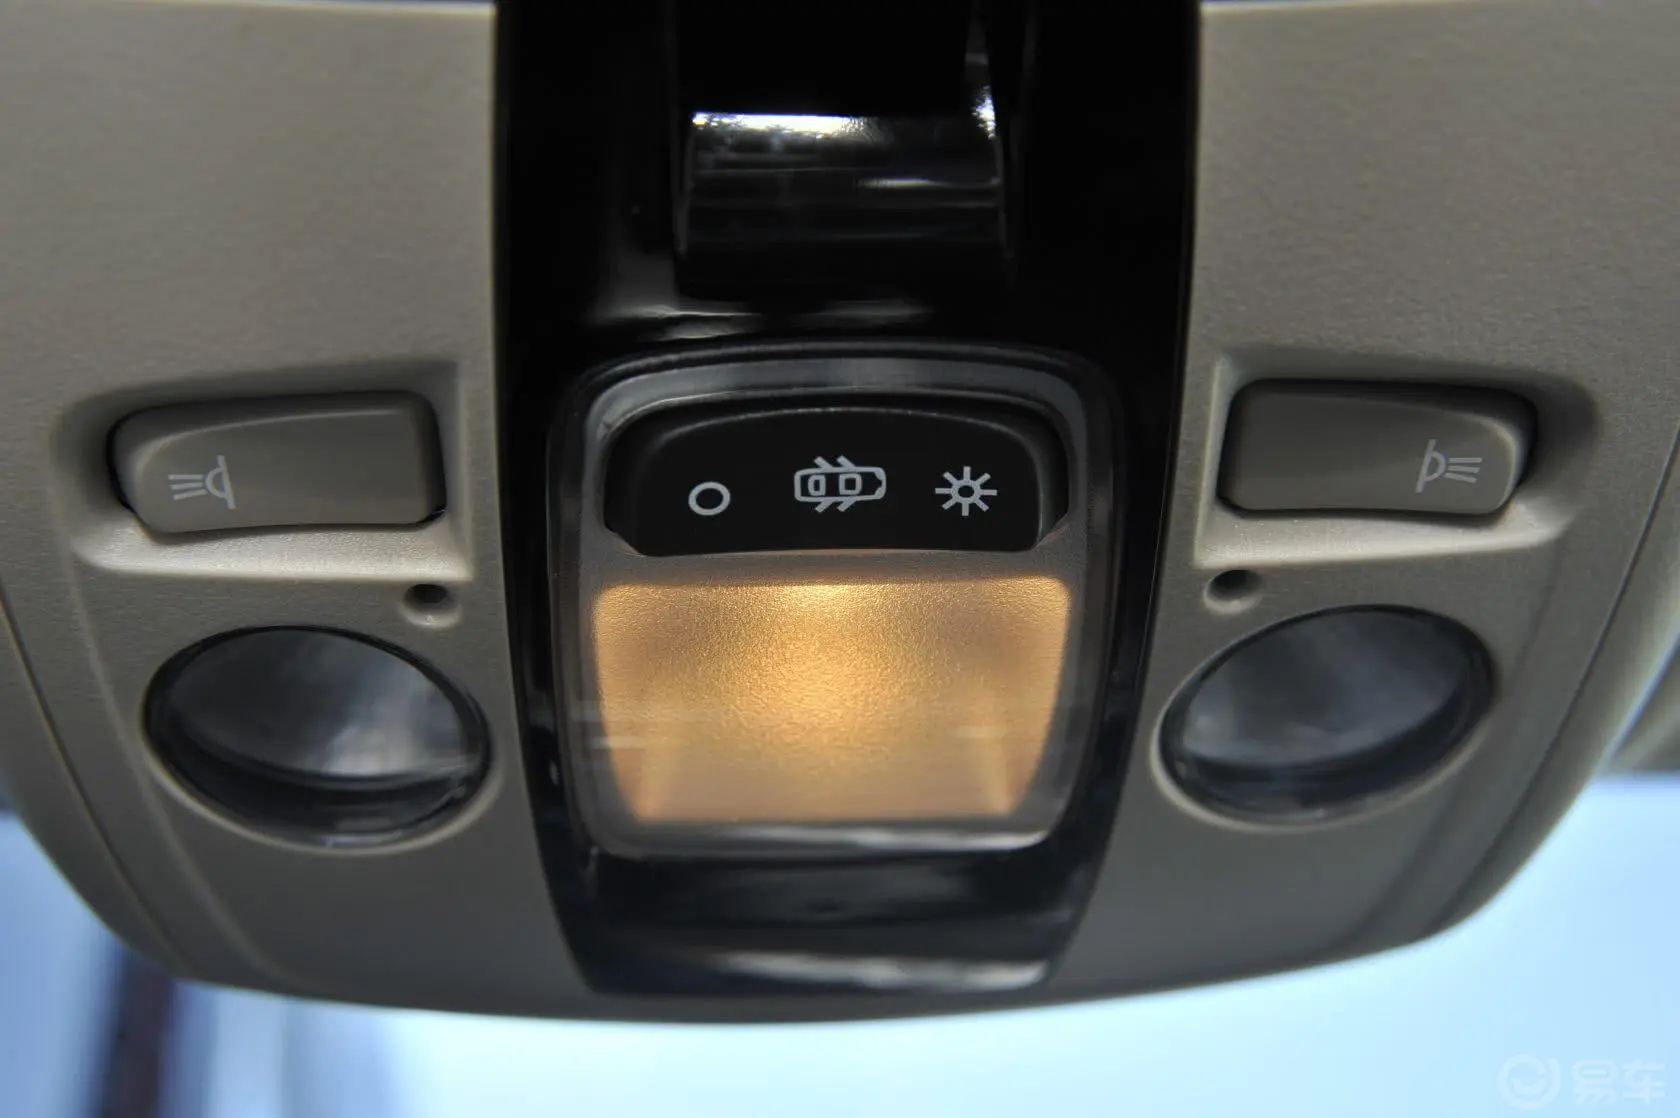 DS 5LS1.8L VTi140 自动舒适版前排车顶中央控制区